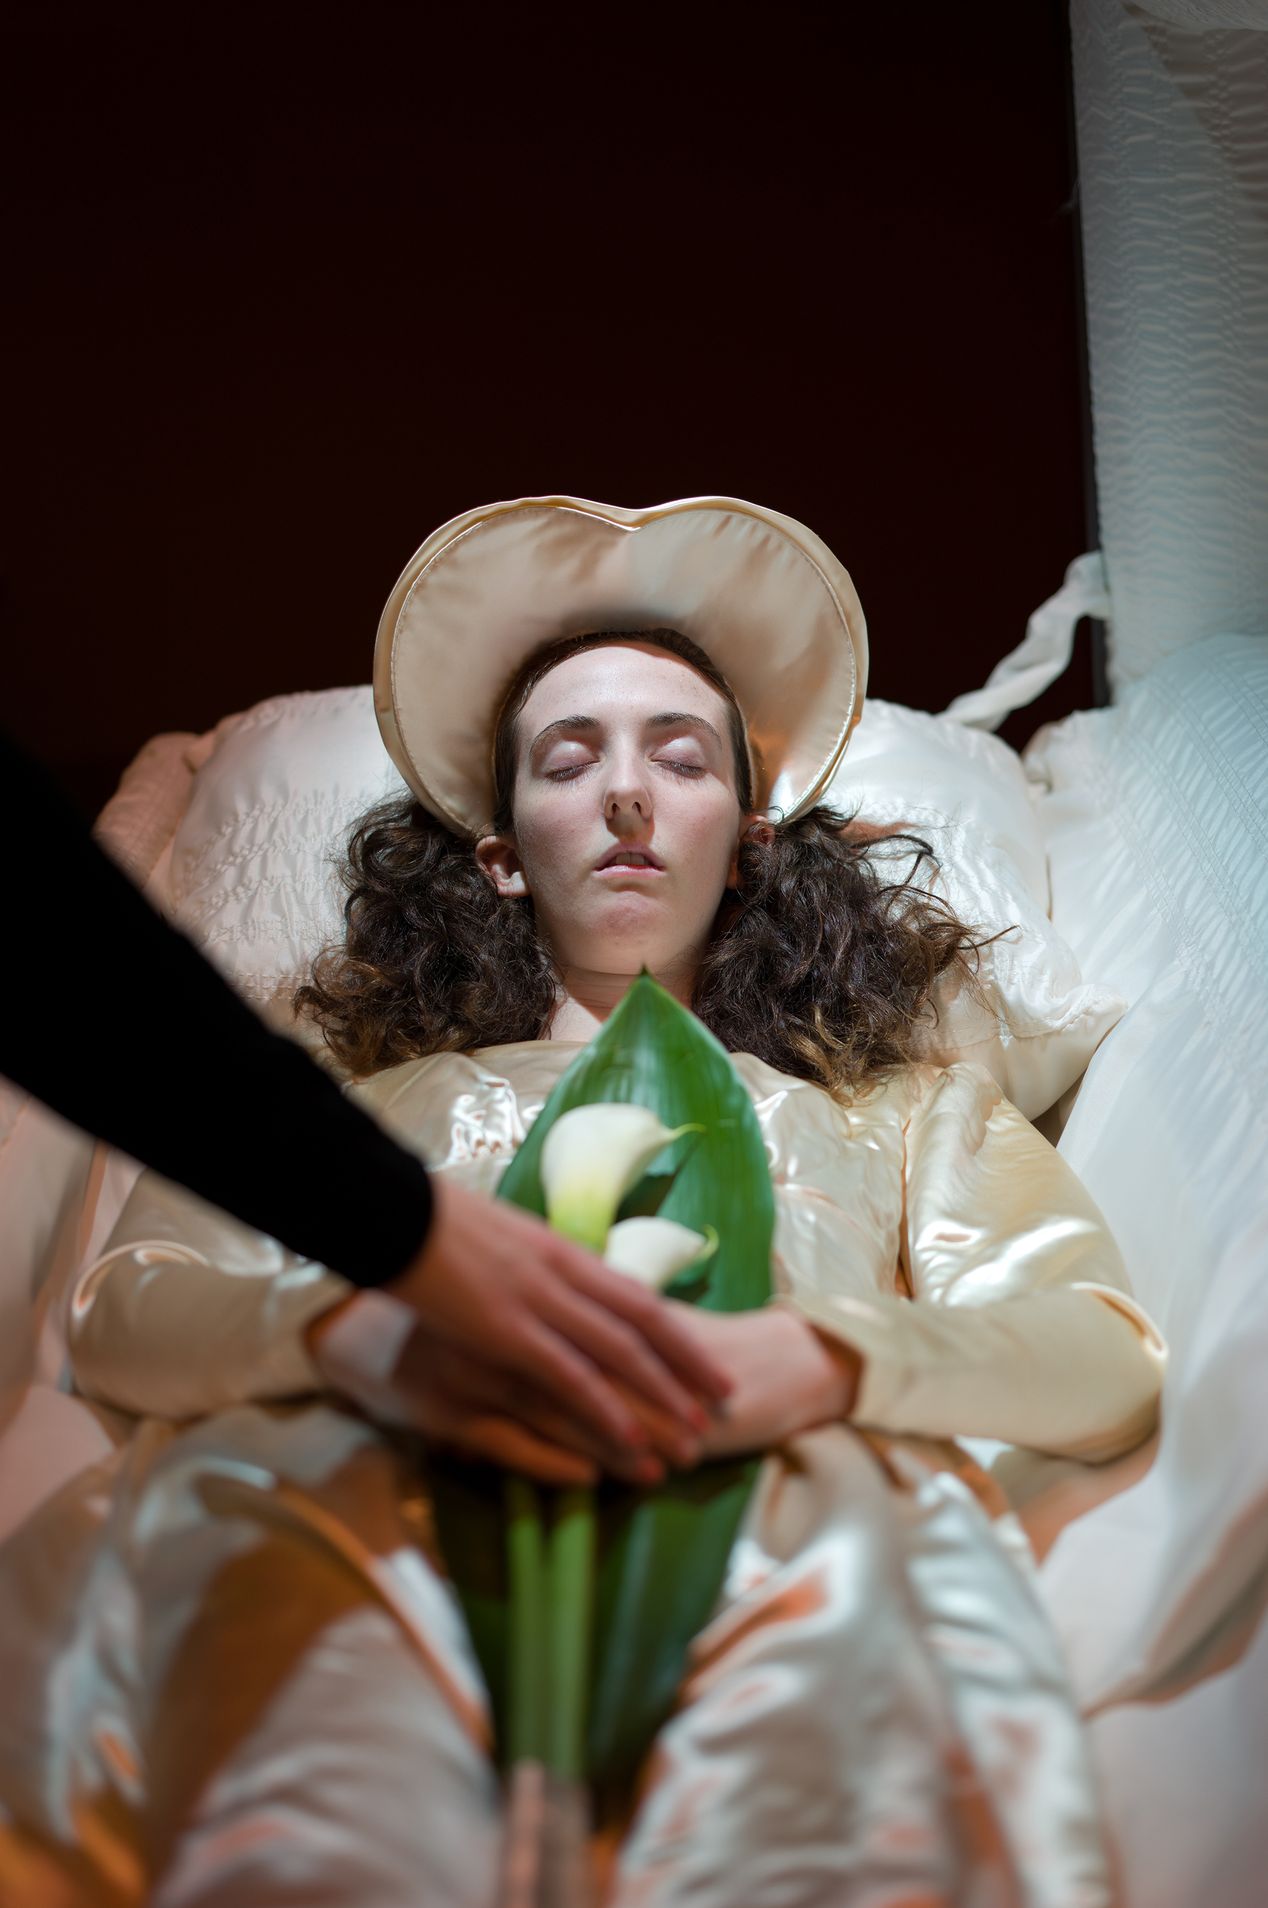 A woman in a casket, editorial portrait photography, Ilona Szwarc, Los Angeles.